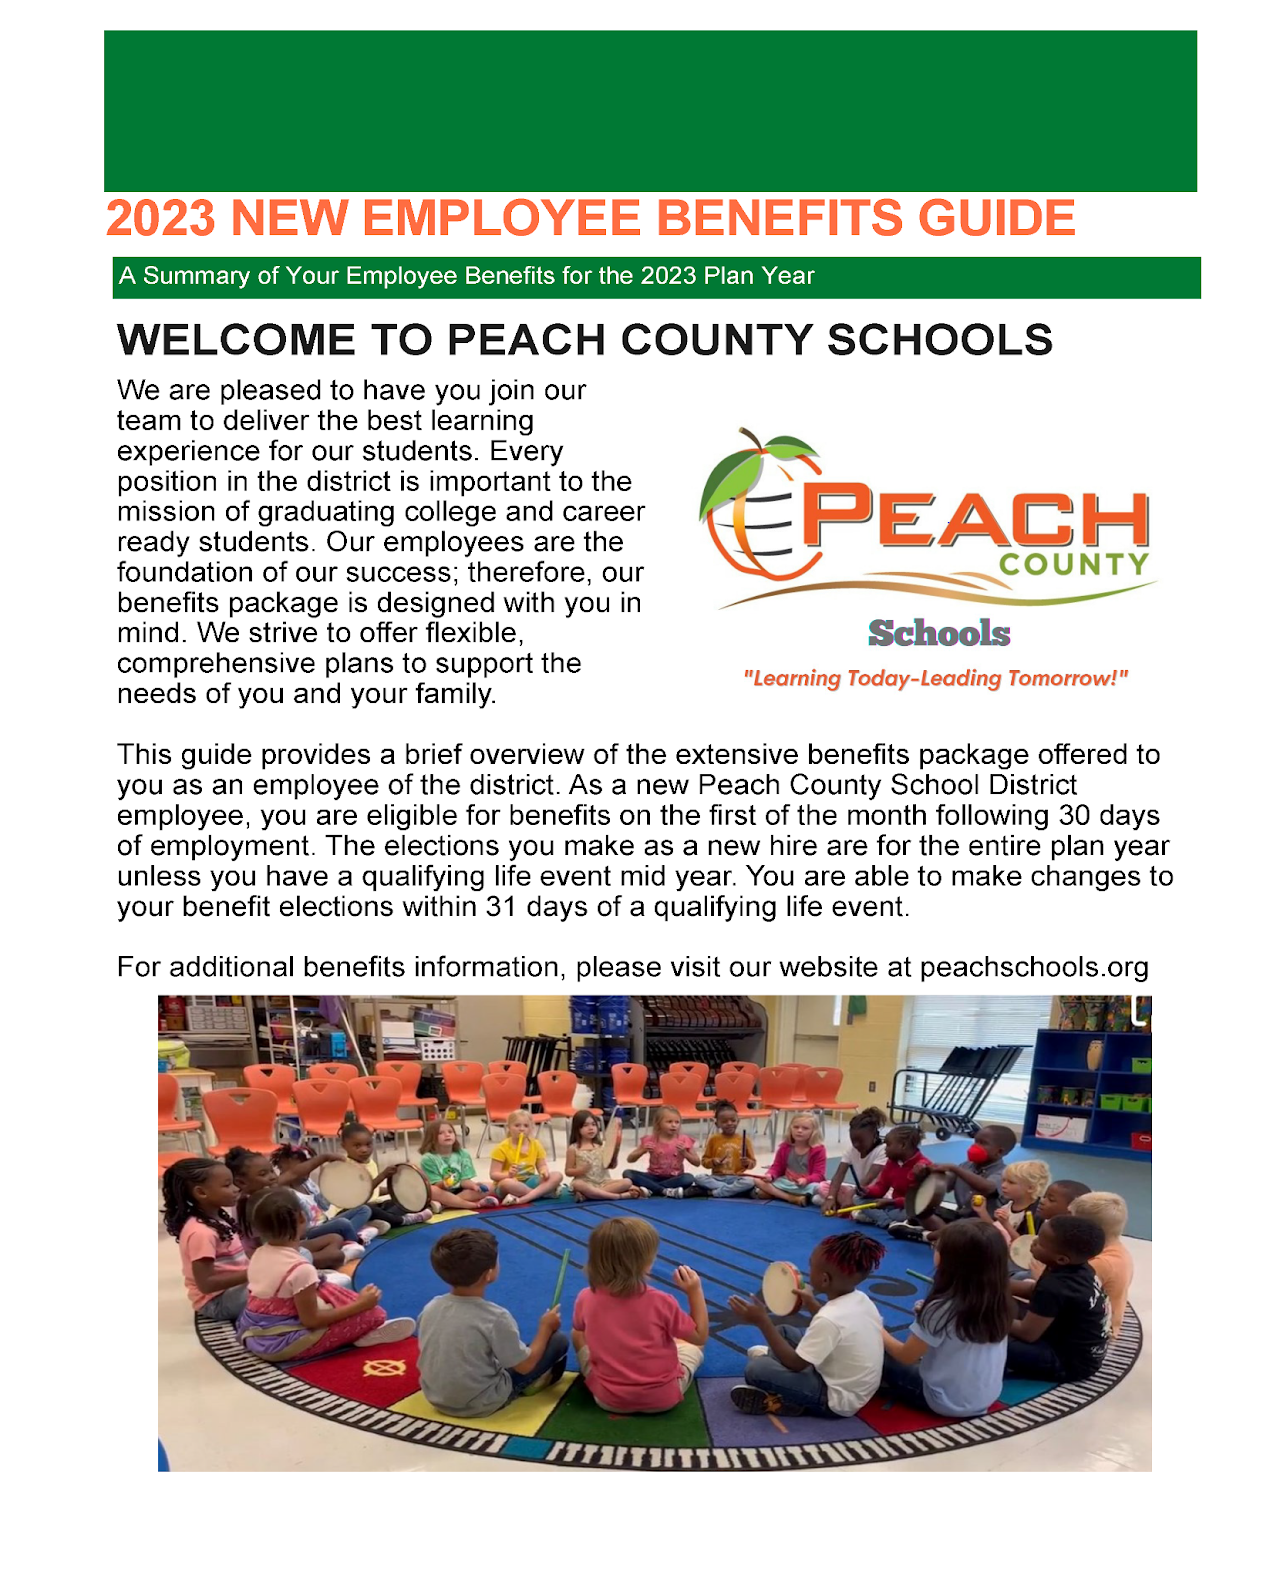 New Hires Peach County Schools